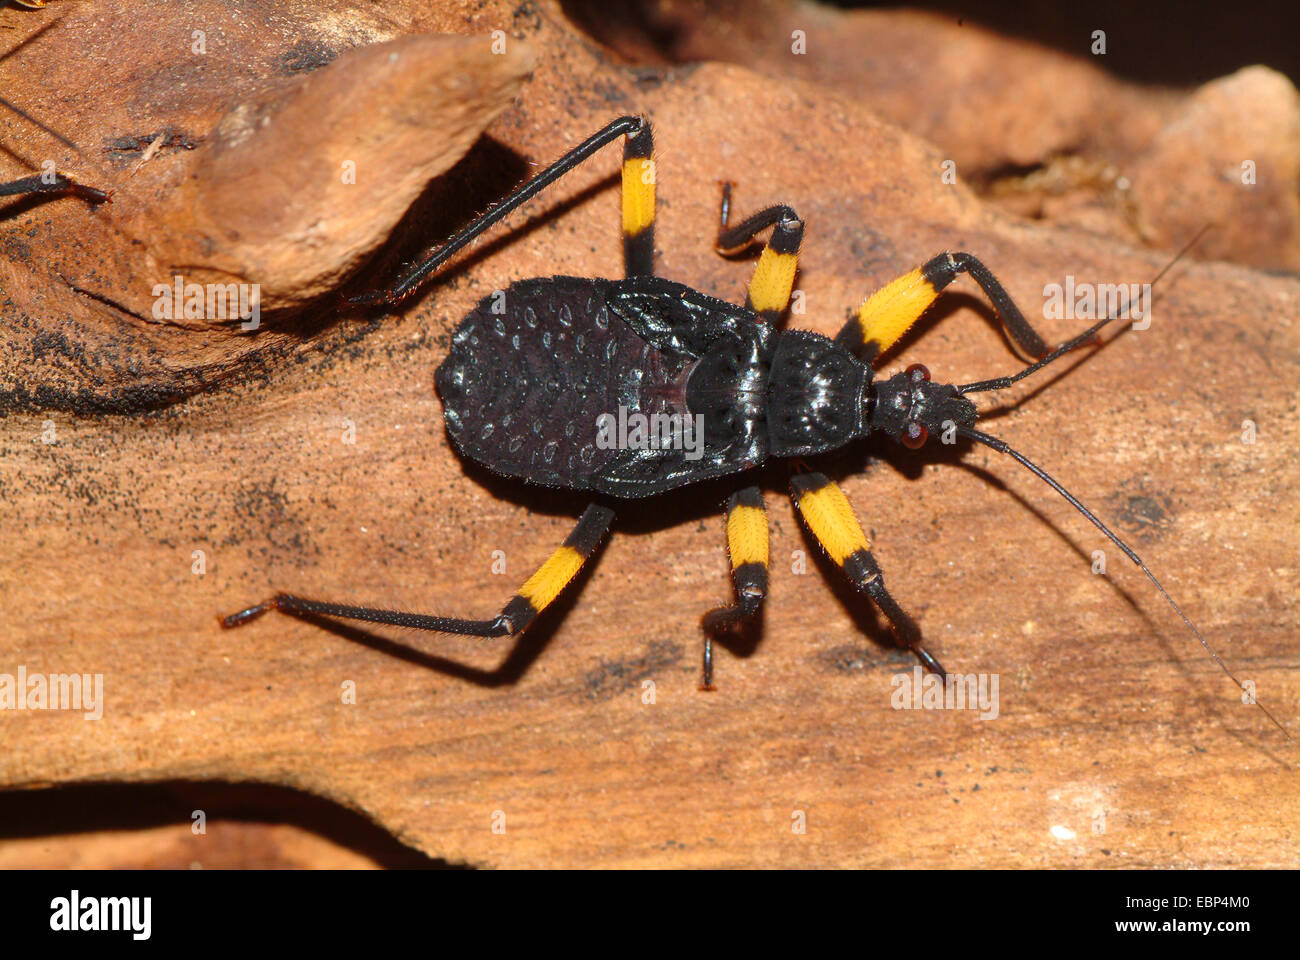 Wite-eyed insecto asesino (Platymeris biguttata), insecto asesino sin puntos típicos Foto de stock